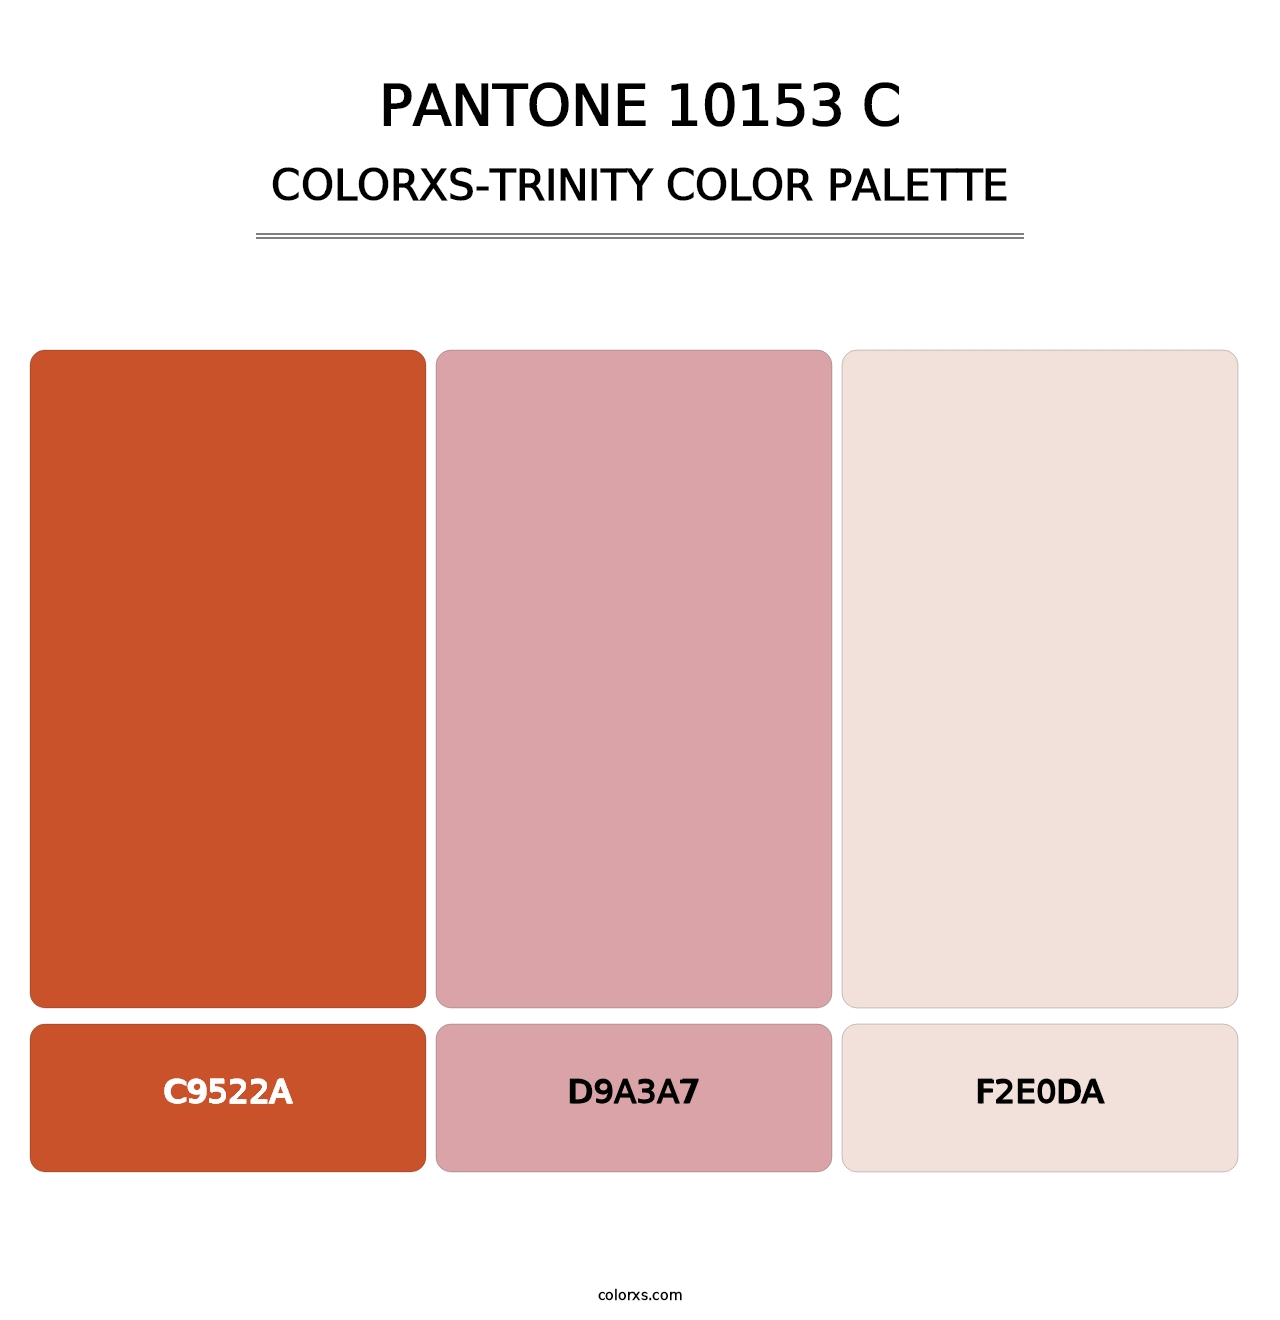 PANTONE 10153 C - Colorxs Trinity Palette